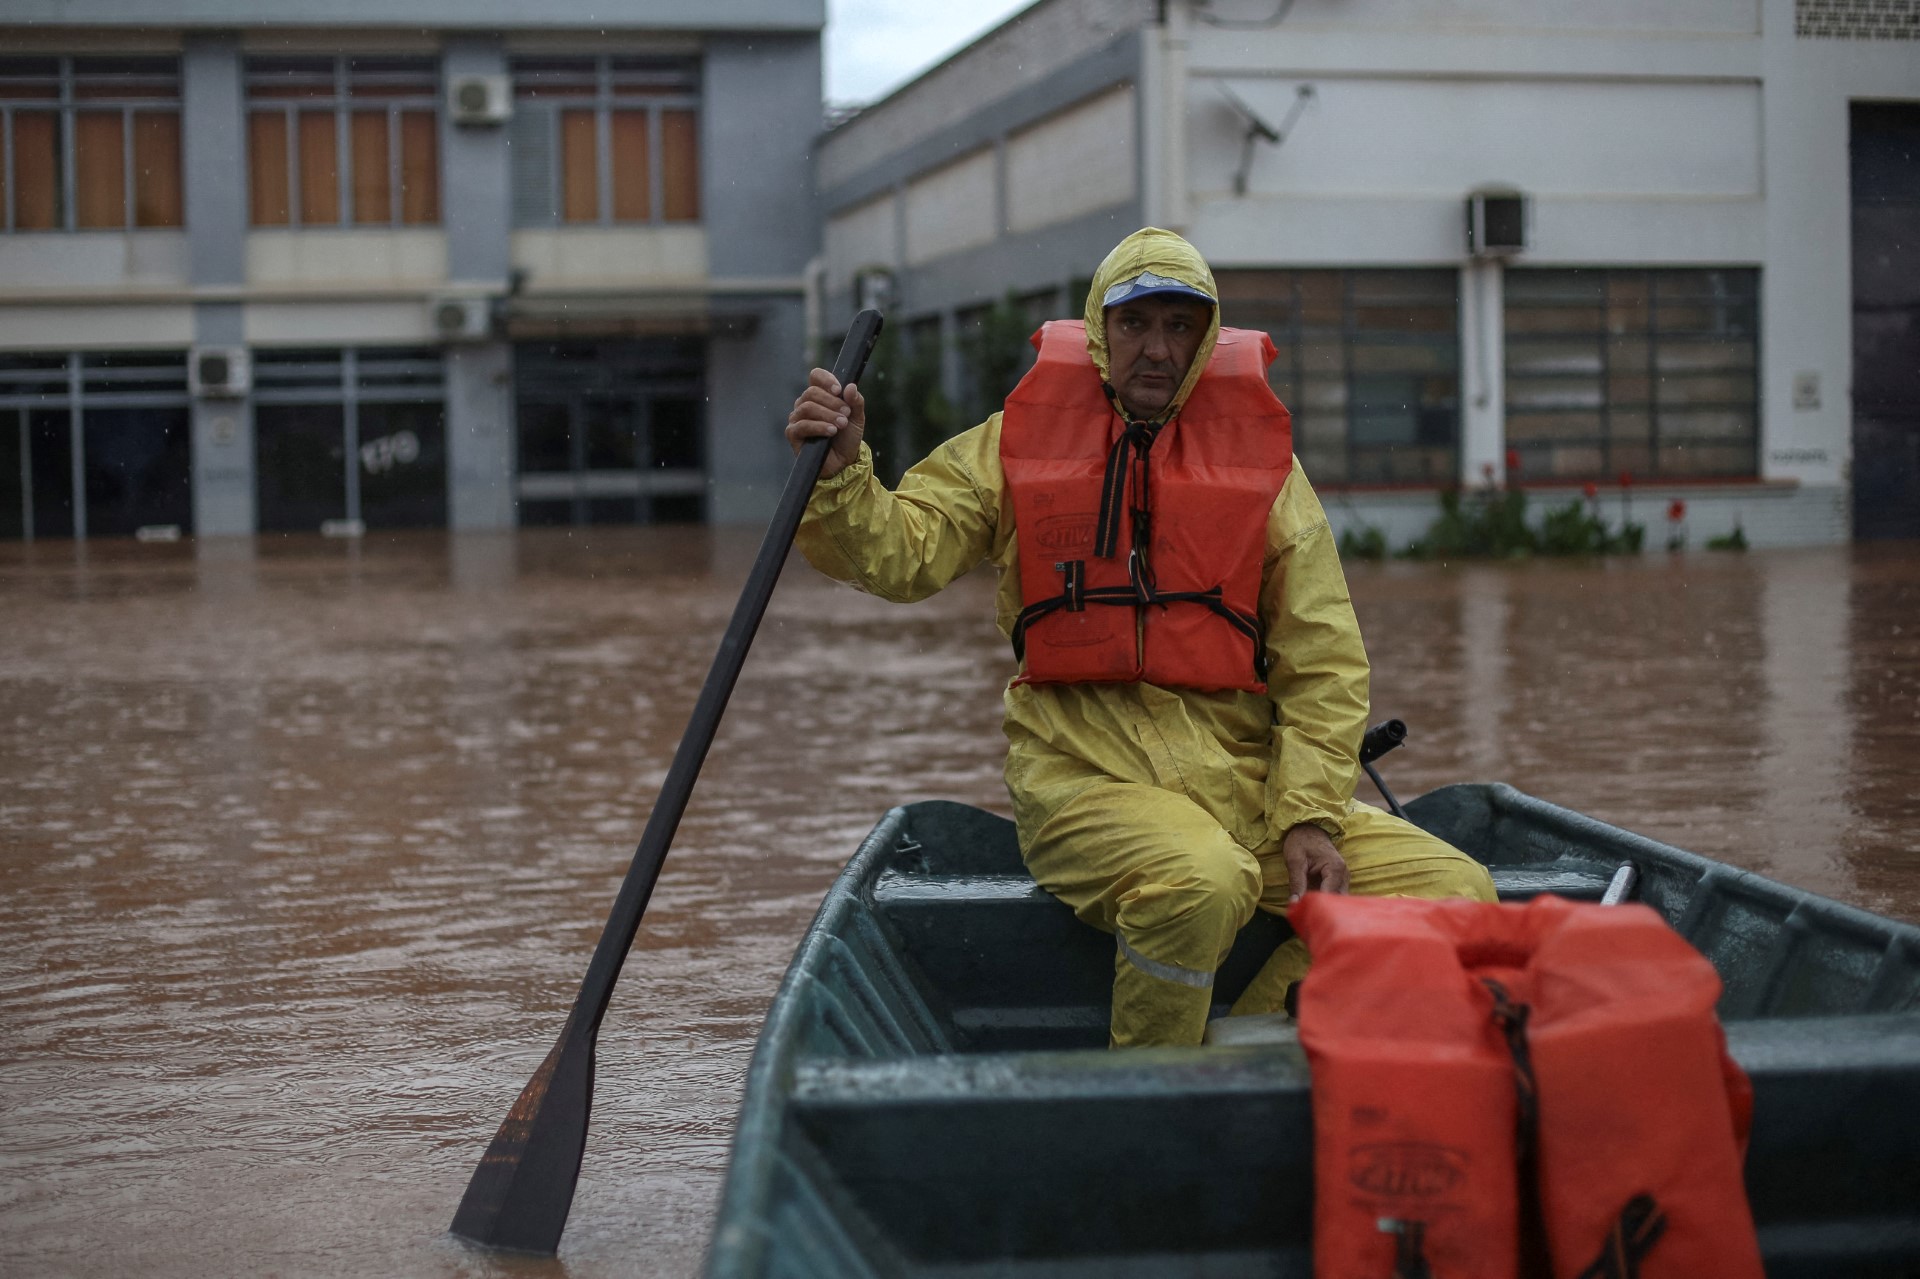 Rains, mudslides kill 29 in southern Brazil’s ‘worst disaster’ | Floods News